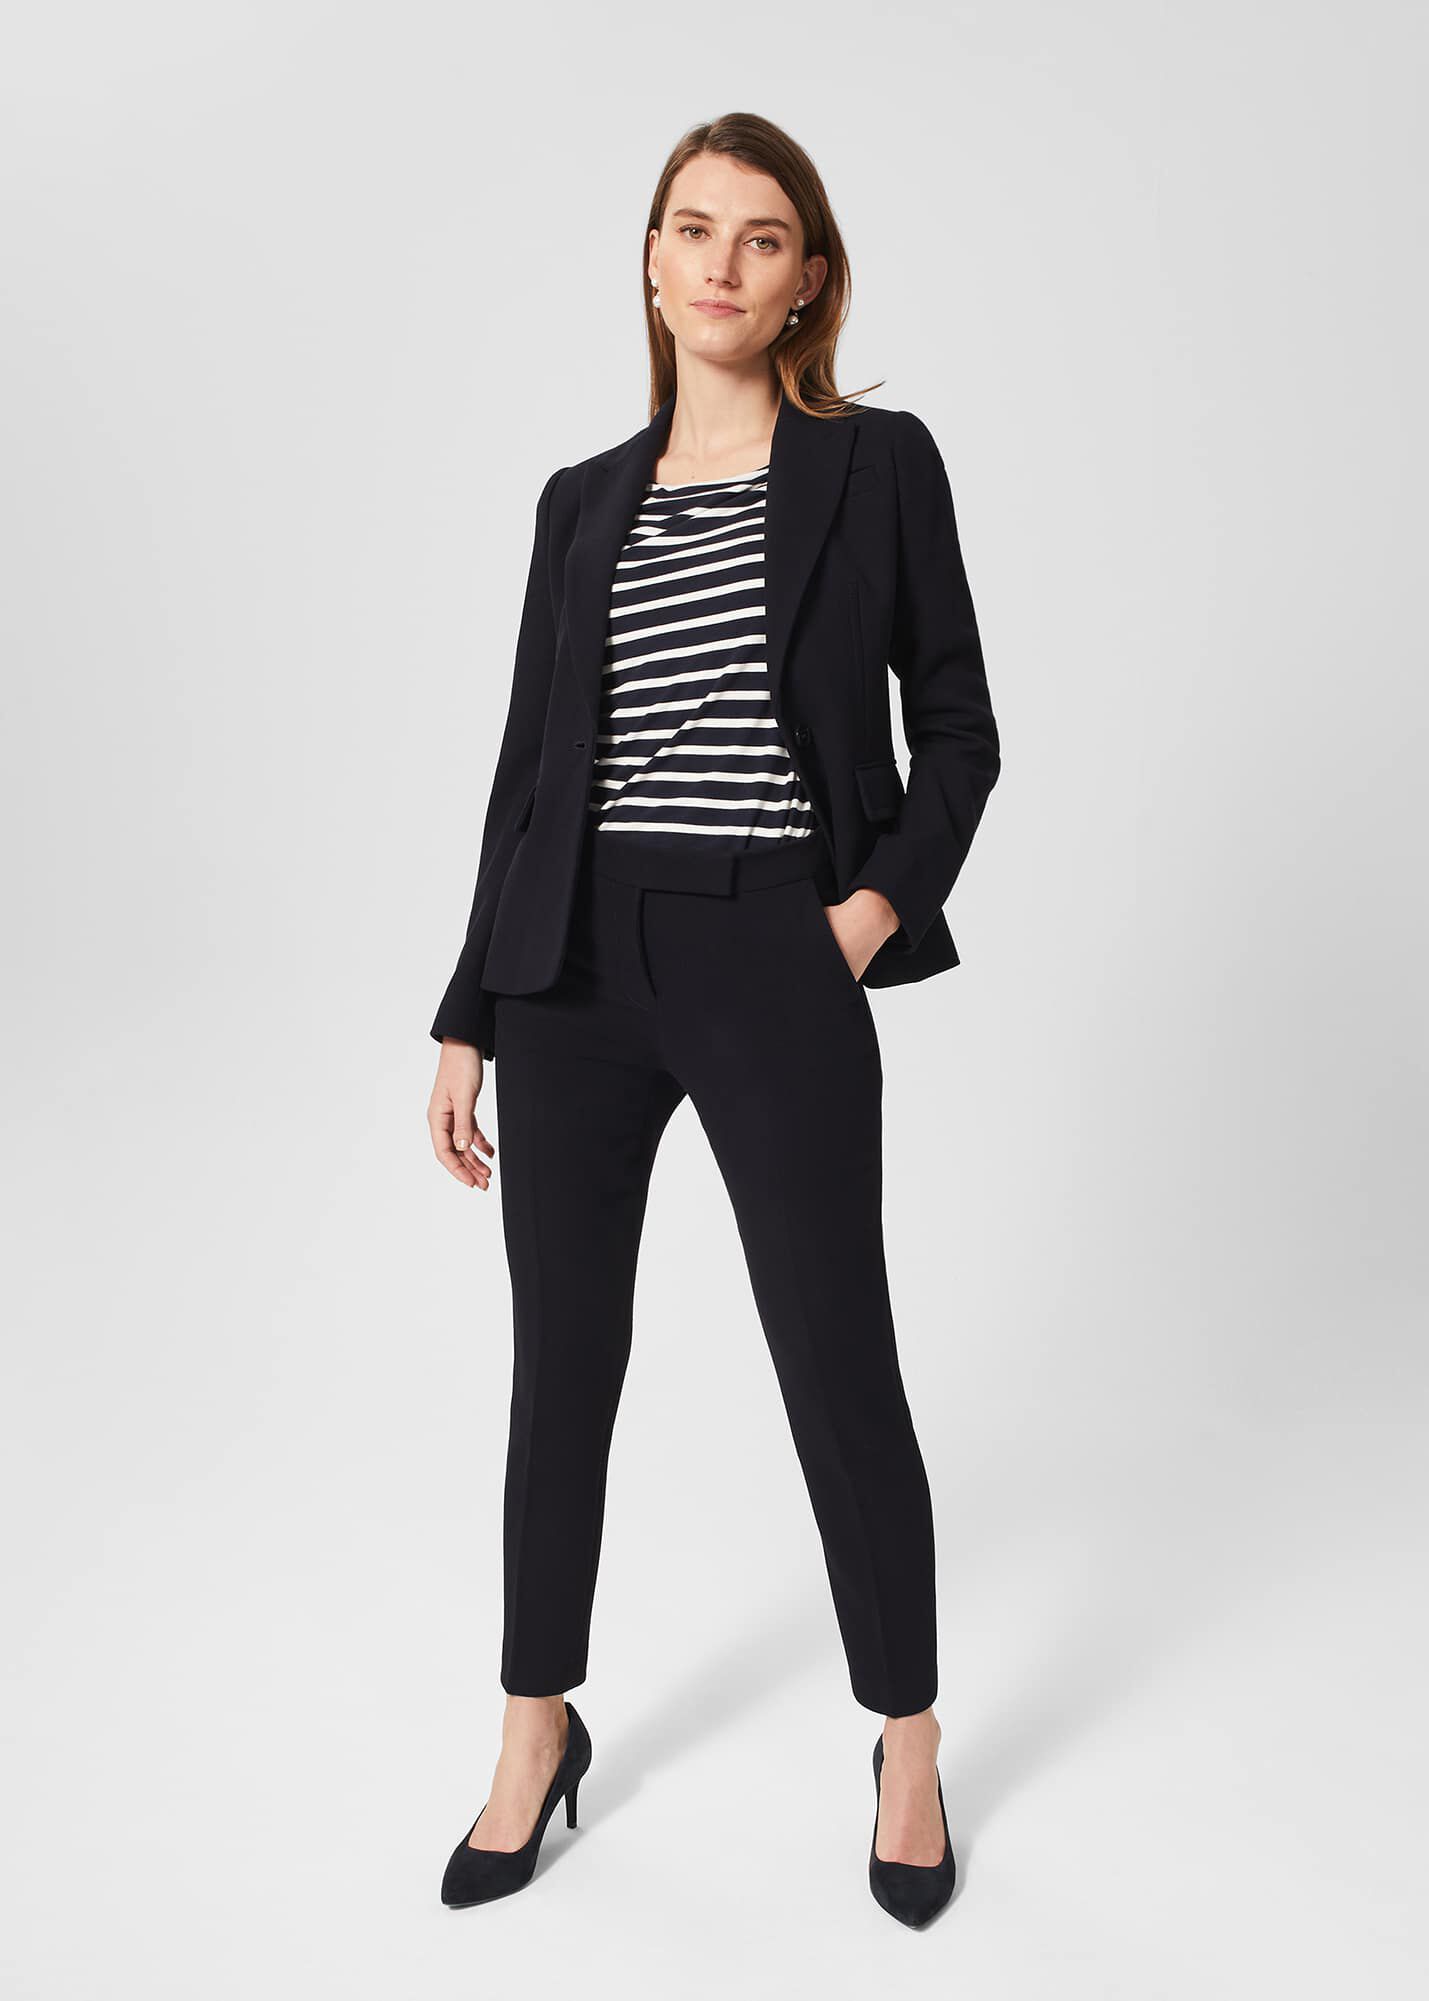 Womens Suit 2piece Navy Blue Striped Business Slim Fit Jacket Office Work  Wear Blazer  Trousers Pants For Female Спортивный К  Pant Suits   AliExpress